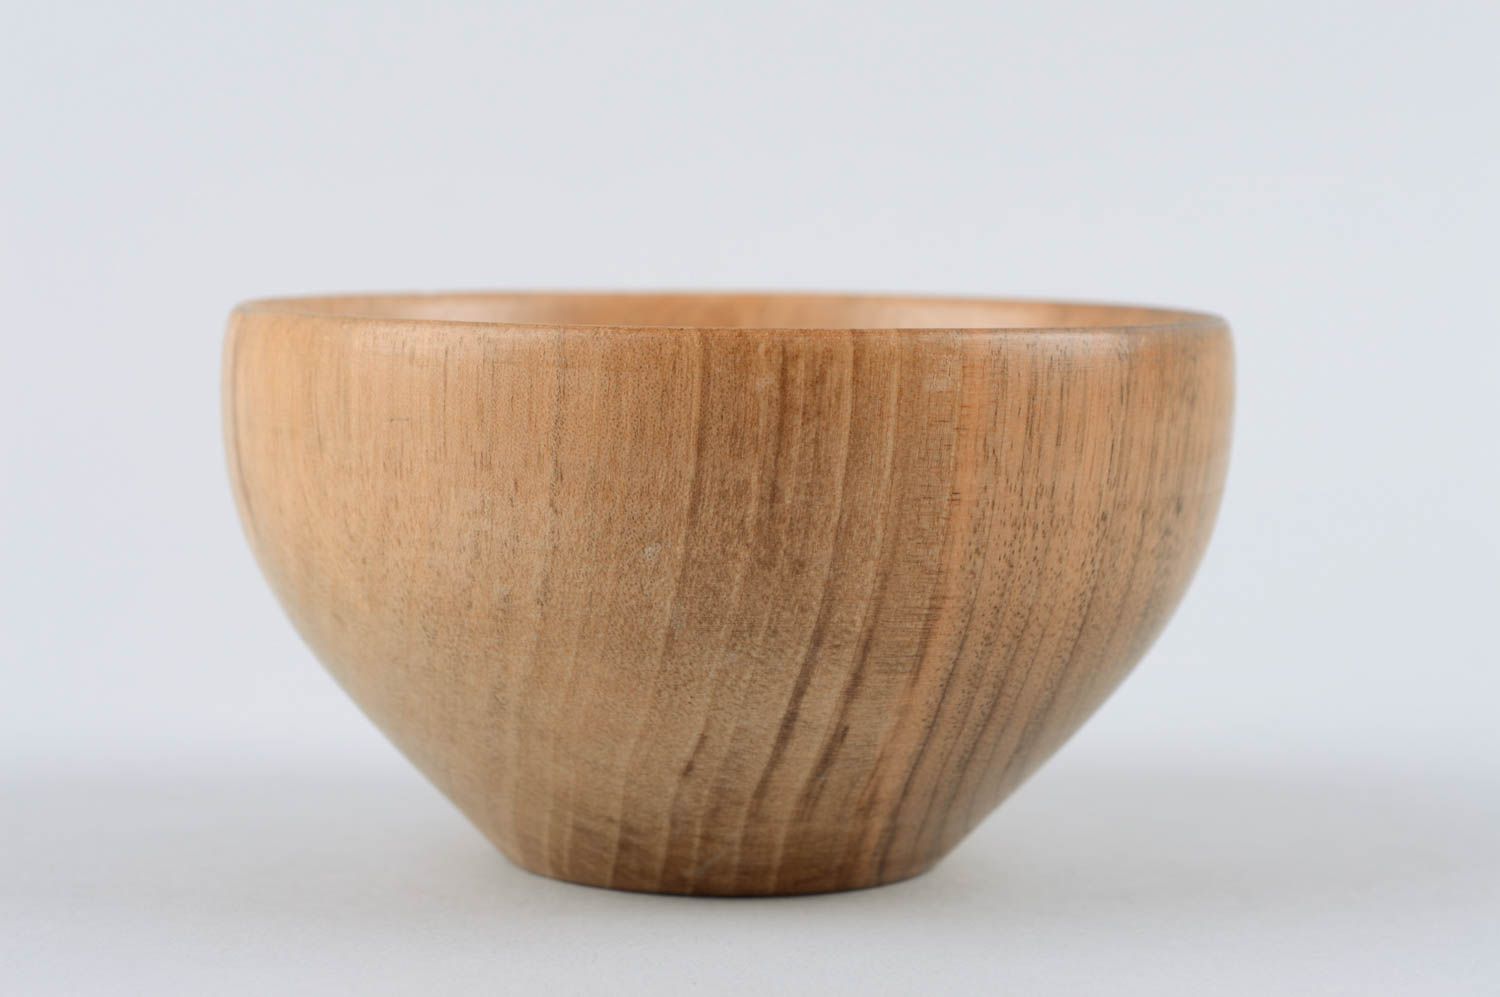 Handmade wooden bowl wooden utensils wooden bowls and plates kitchen decor photo 4